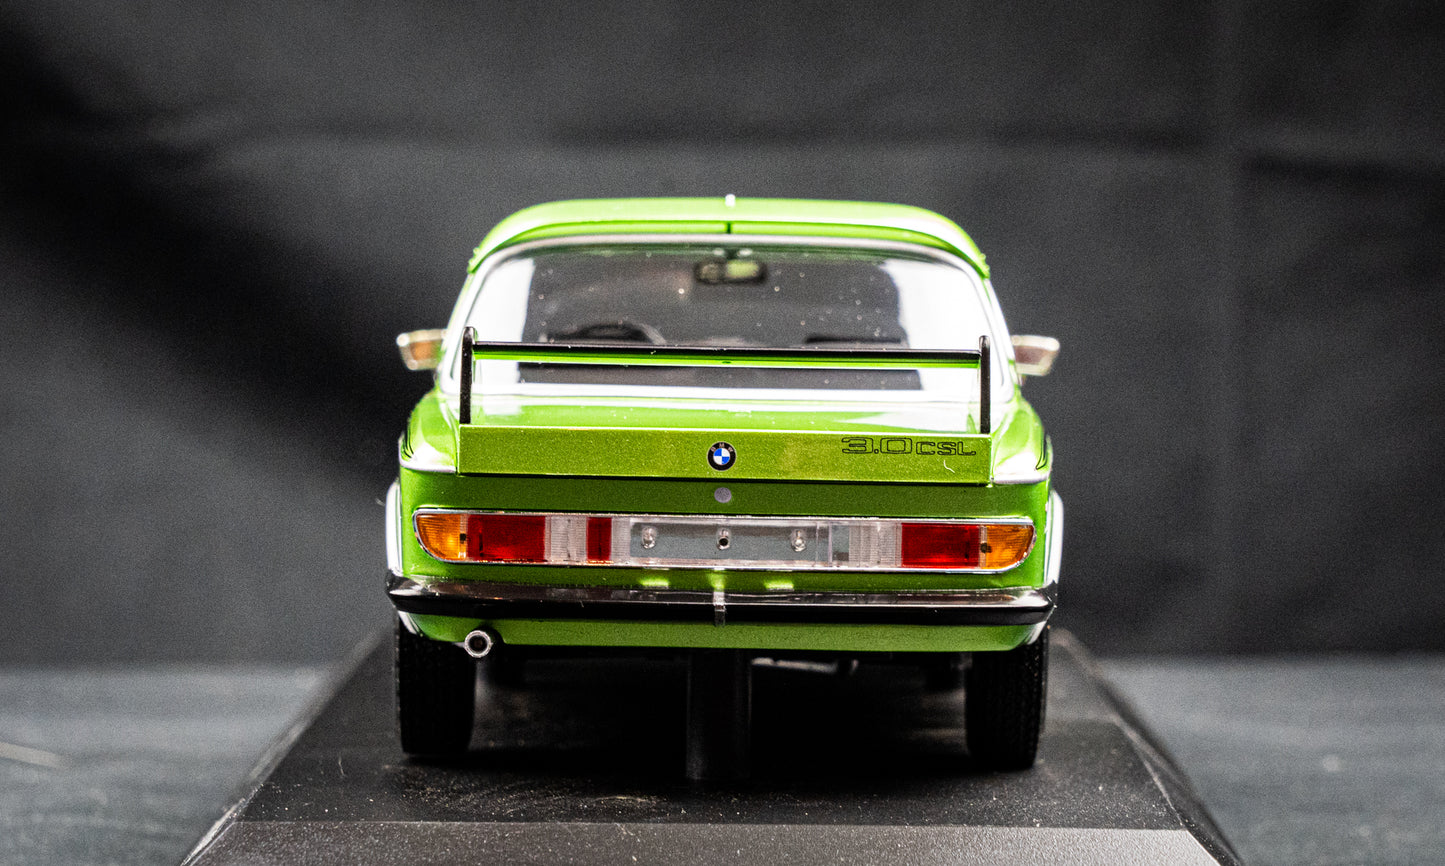 BMW 3.0 CSL E9 1973 grün lim. Edition 504 Stk. - Minichamps 1:18